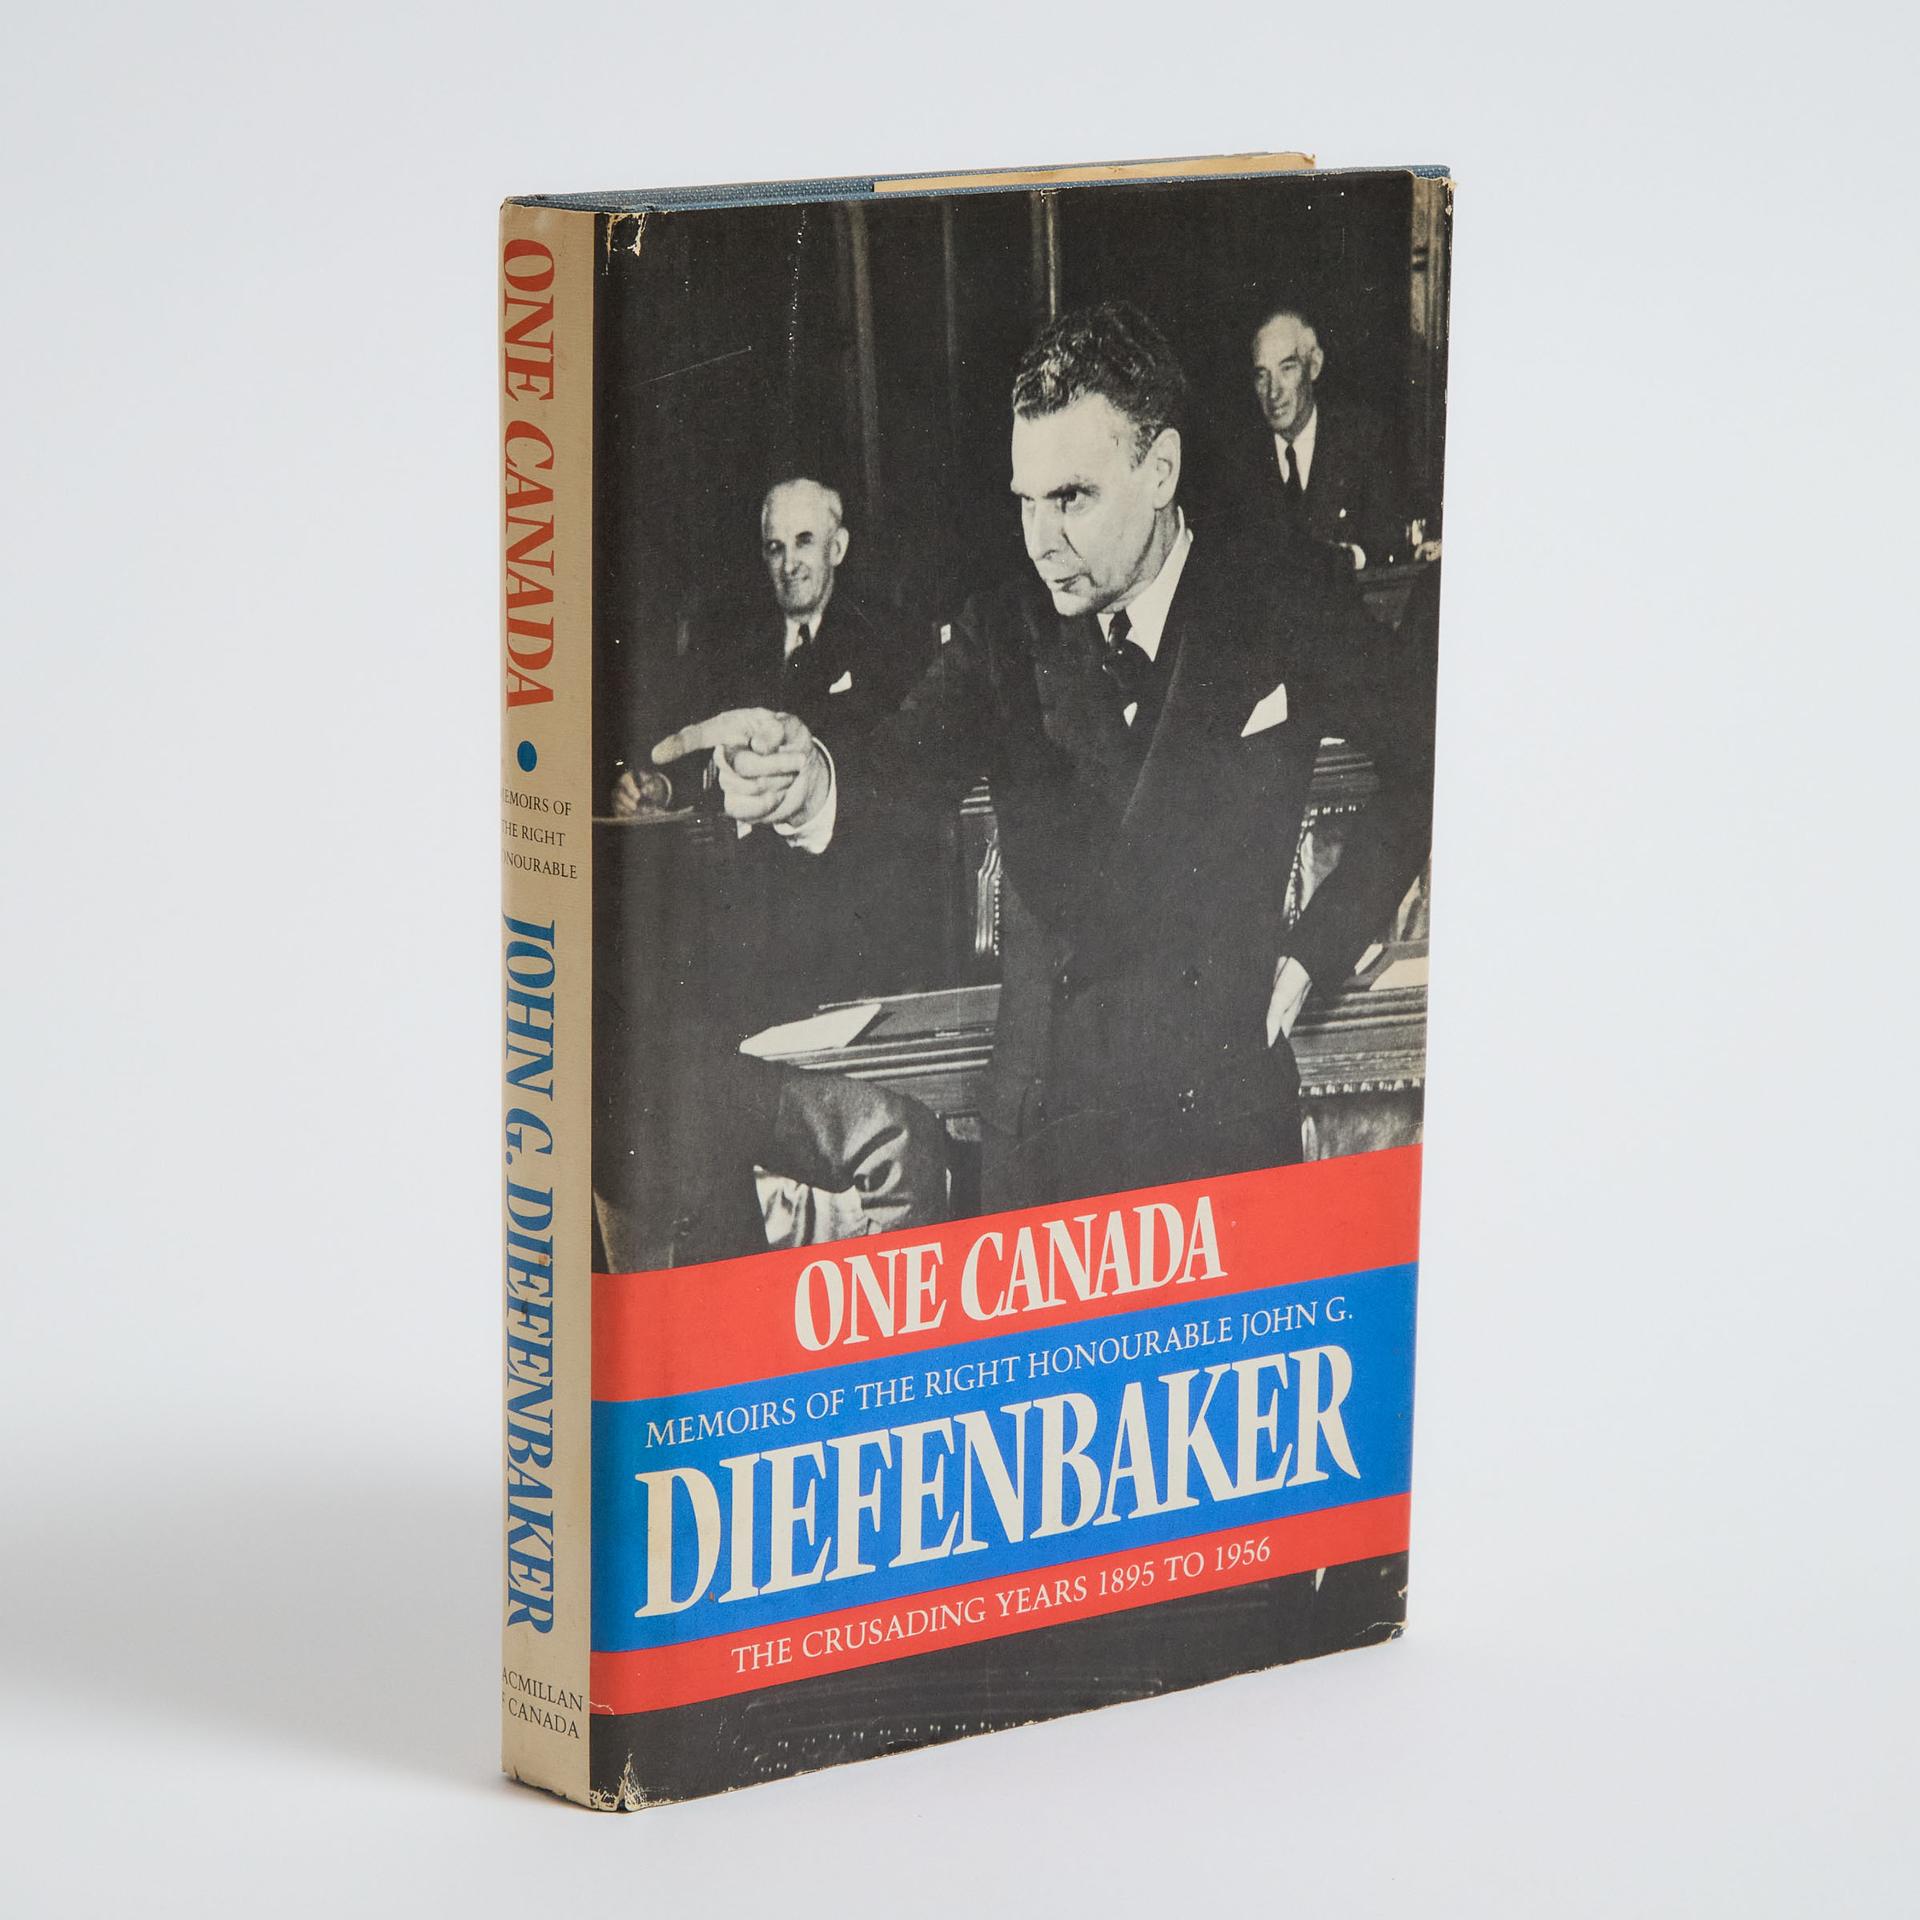 John G. Diefenbaker - The Crusading Years 1895-1956